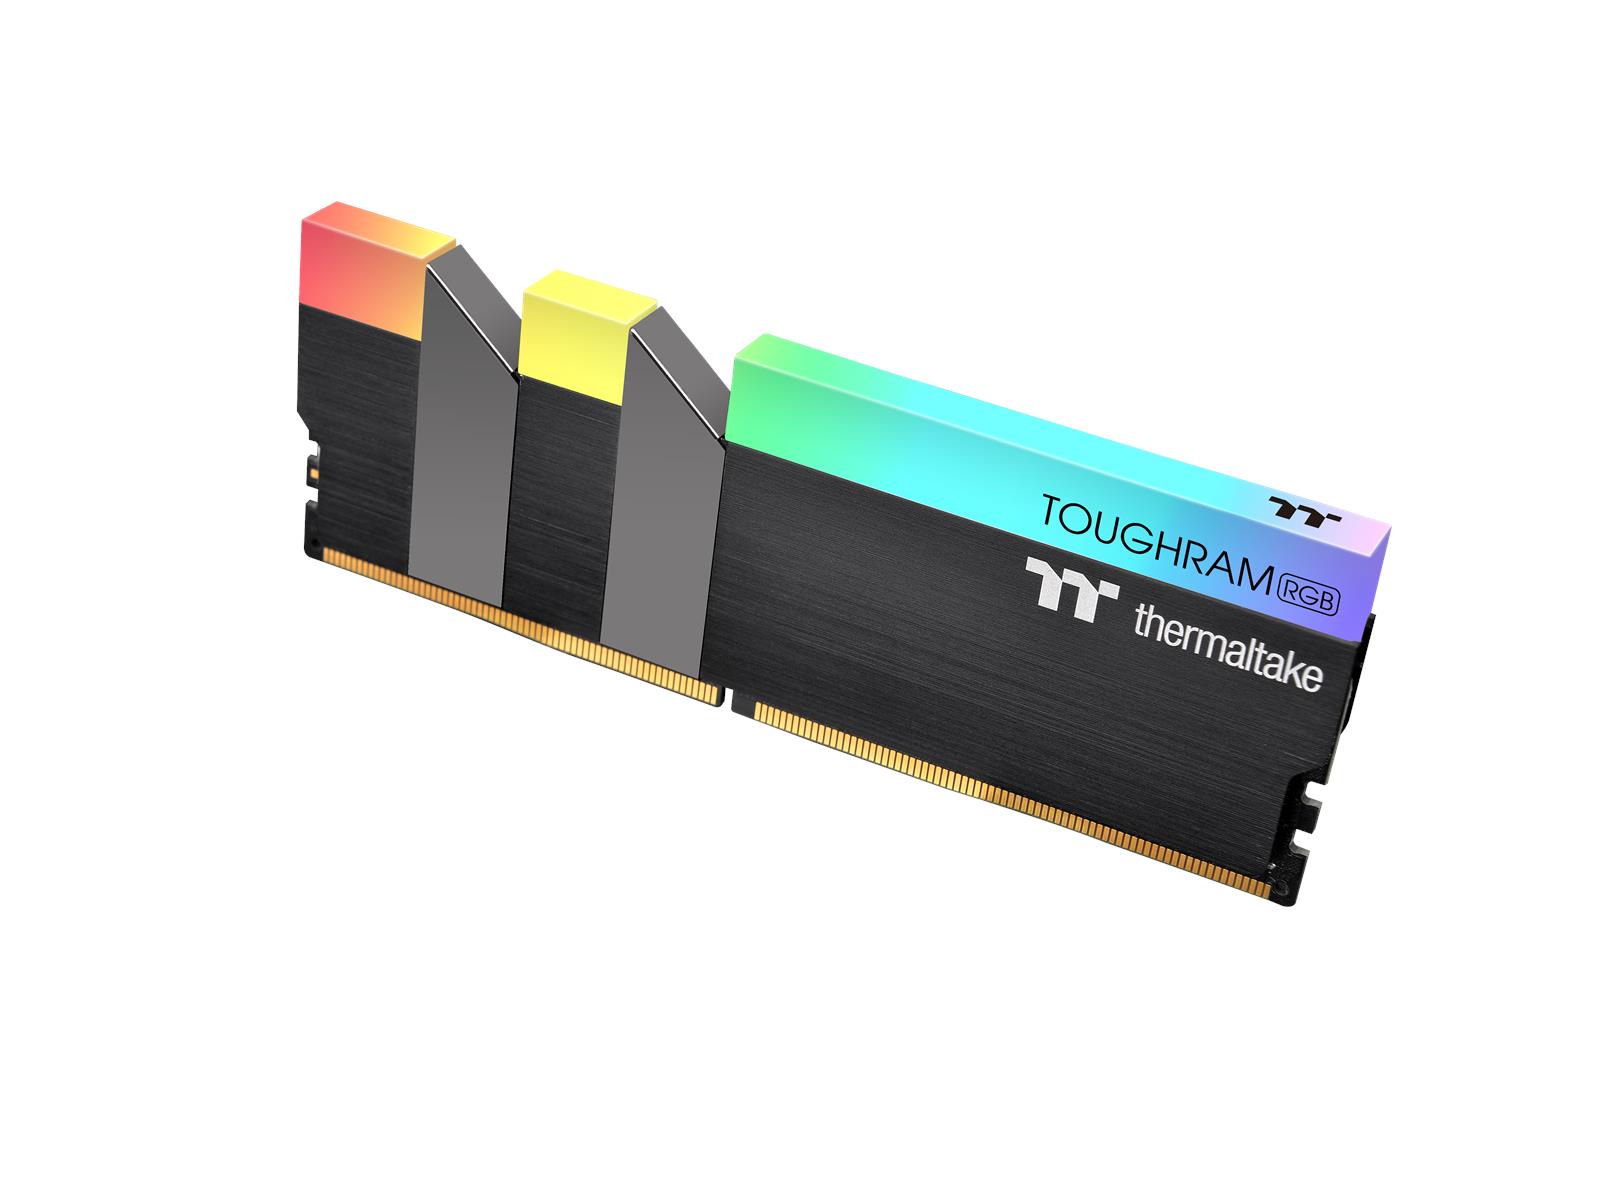 Thermaltake TOUGHRAM RGB DDR4 Memory Series 2